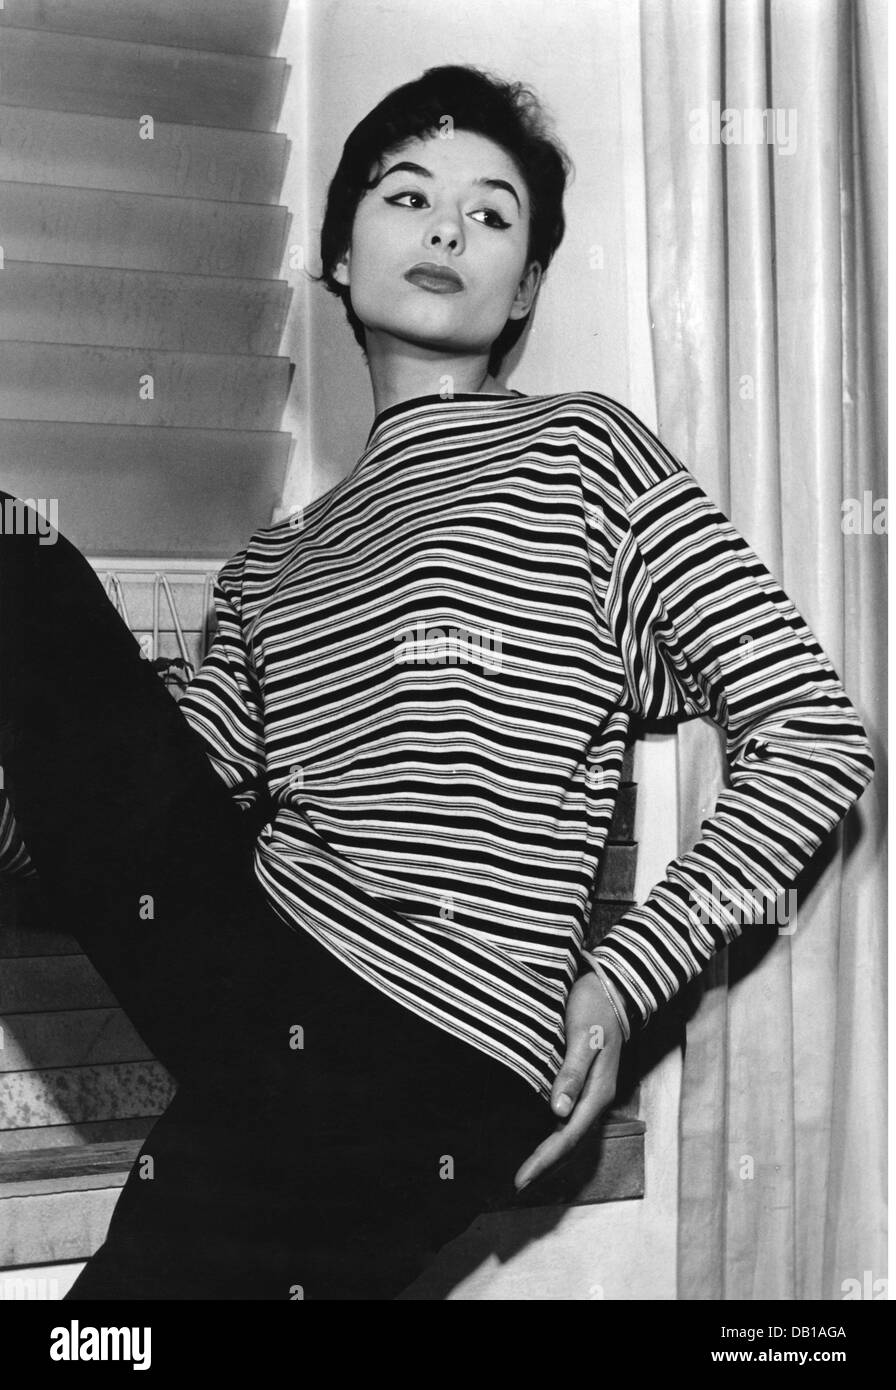 Moda, anni '50, manichino in pullover a righe e pantaloni, anni '50,  Additional-Rights-Clearences-Not Available Foto stock - Alamy